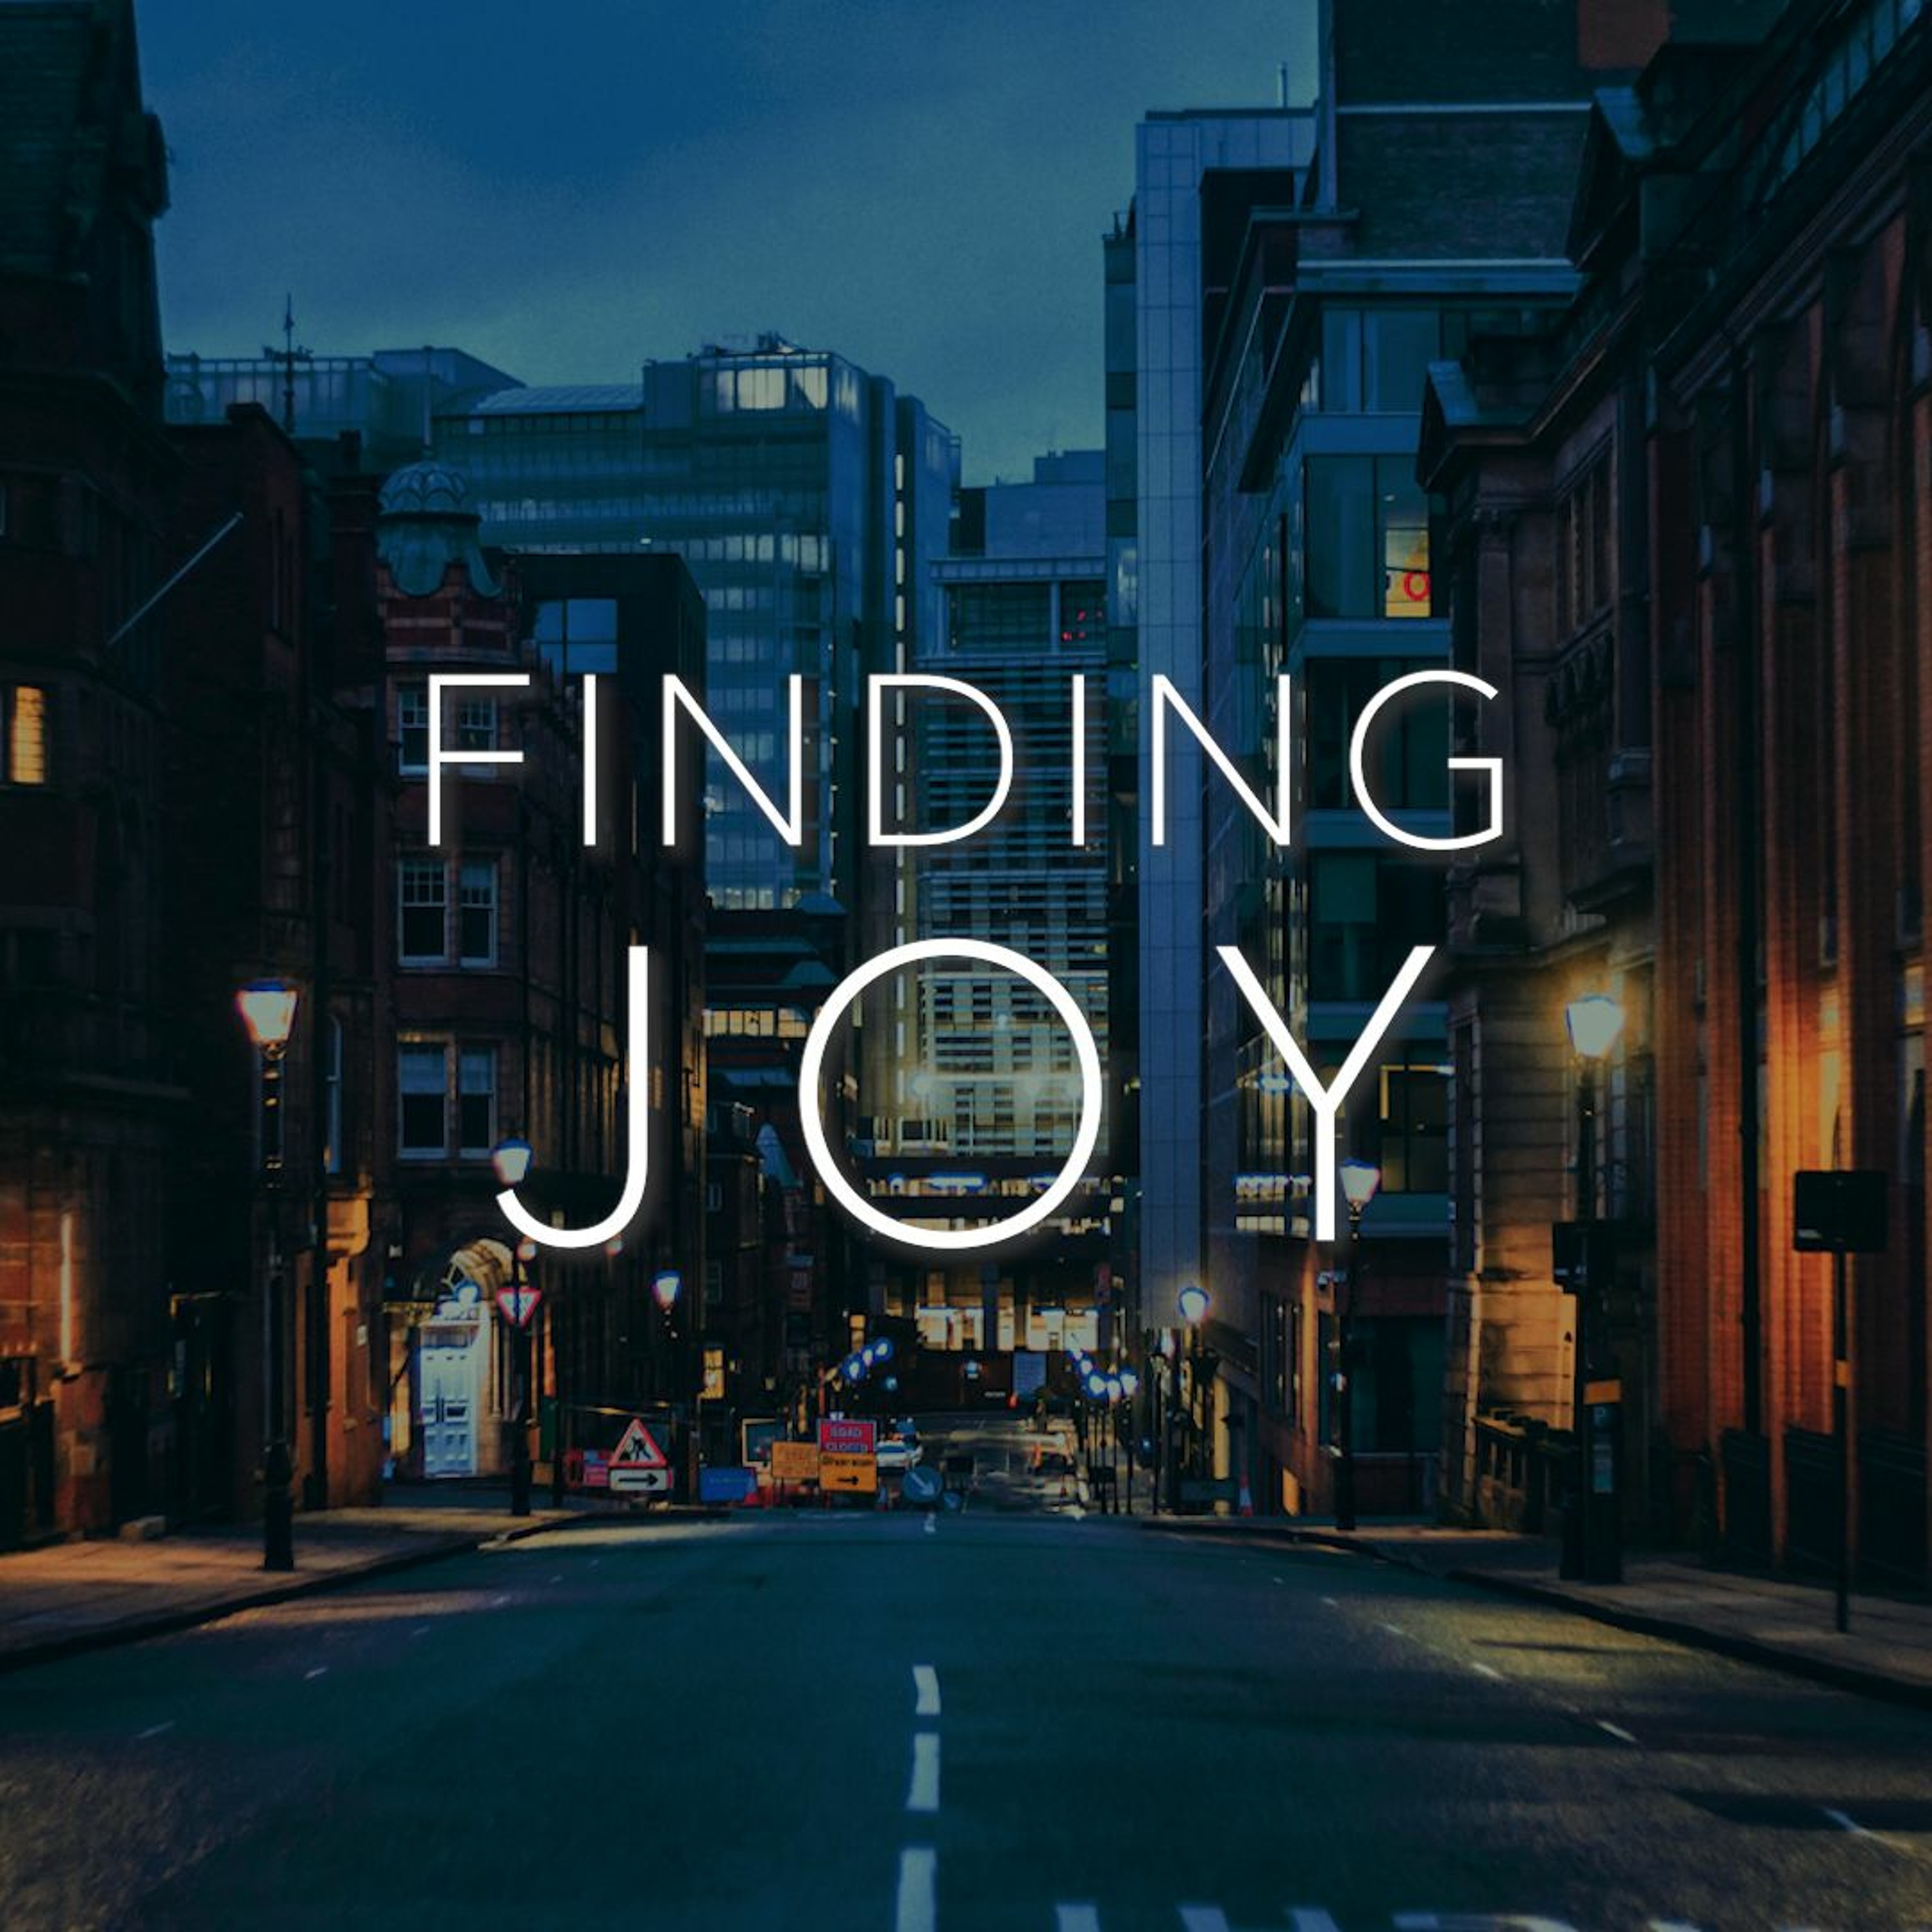 2. Joy In Hardship - Mike Blaber